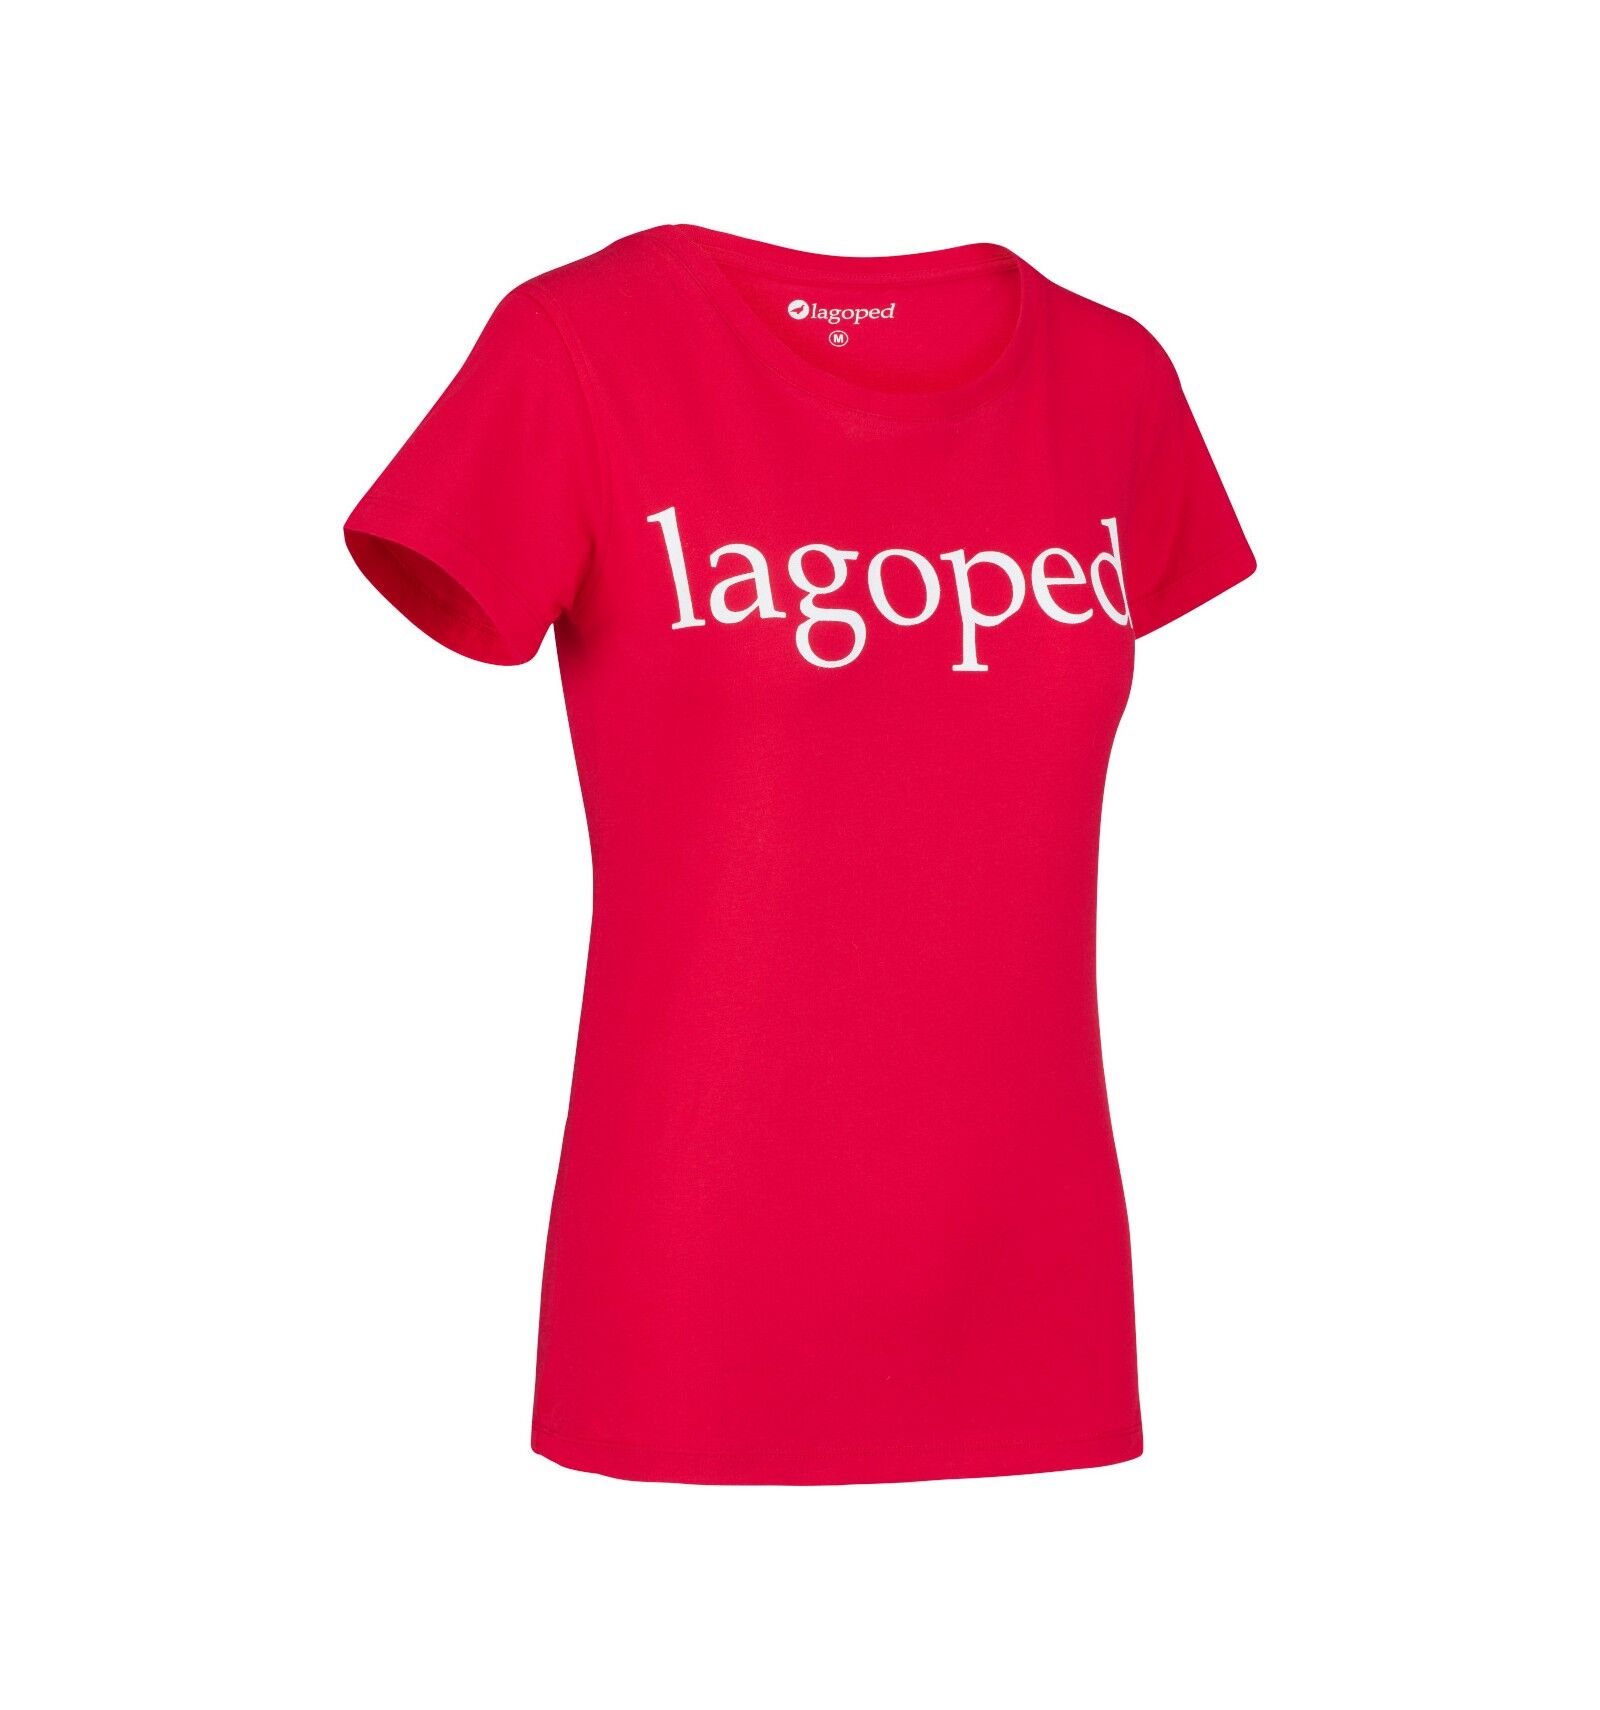 Lagoped Gotee - Camiseta - Mujer